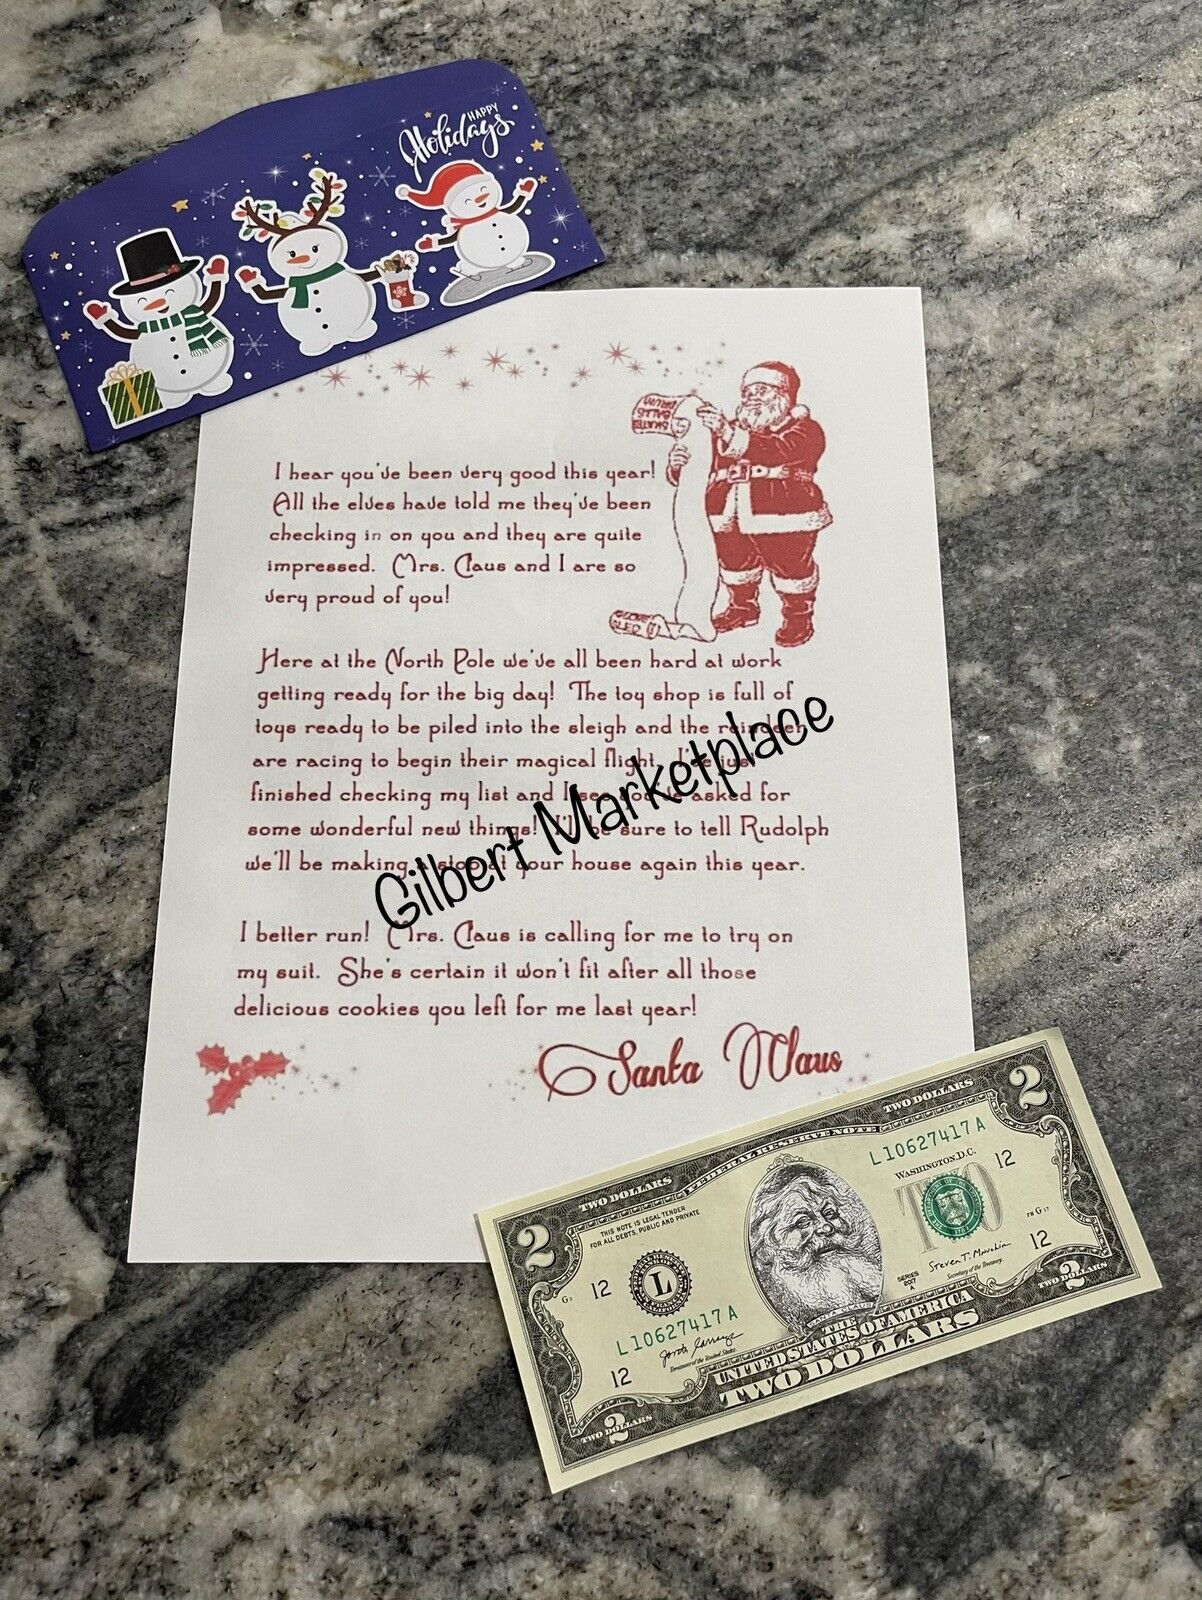 The Santa Claus U.S. $2 Dollar Bill Money \